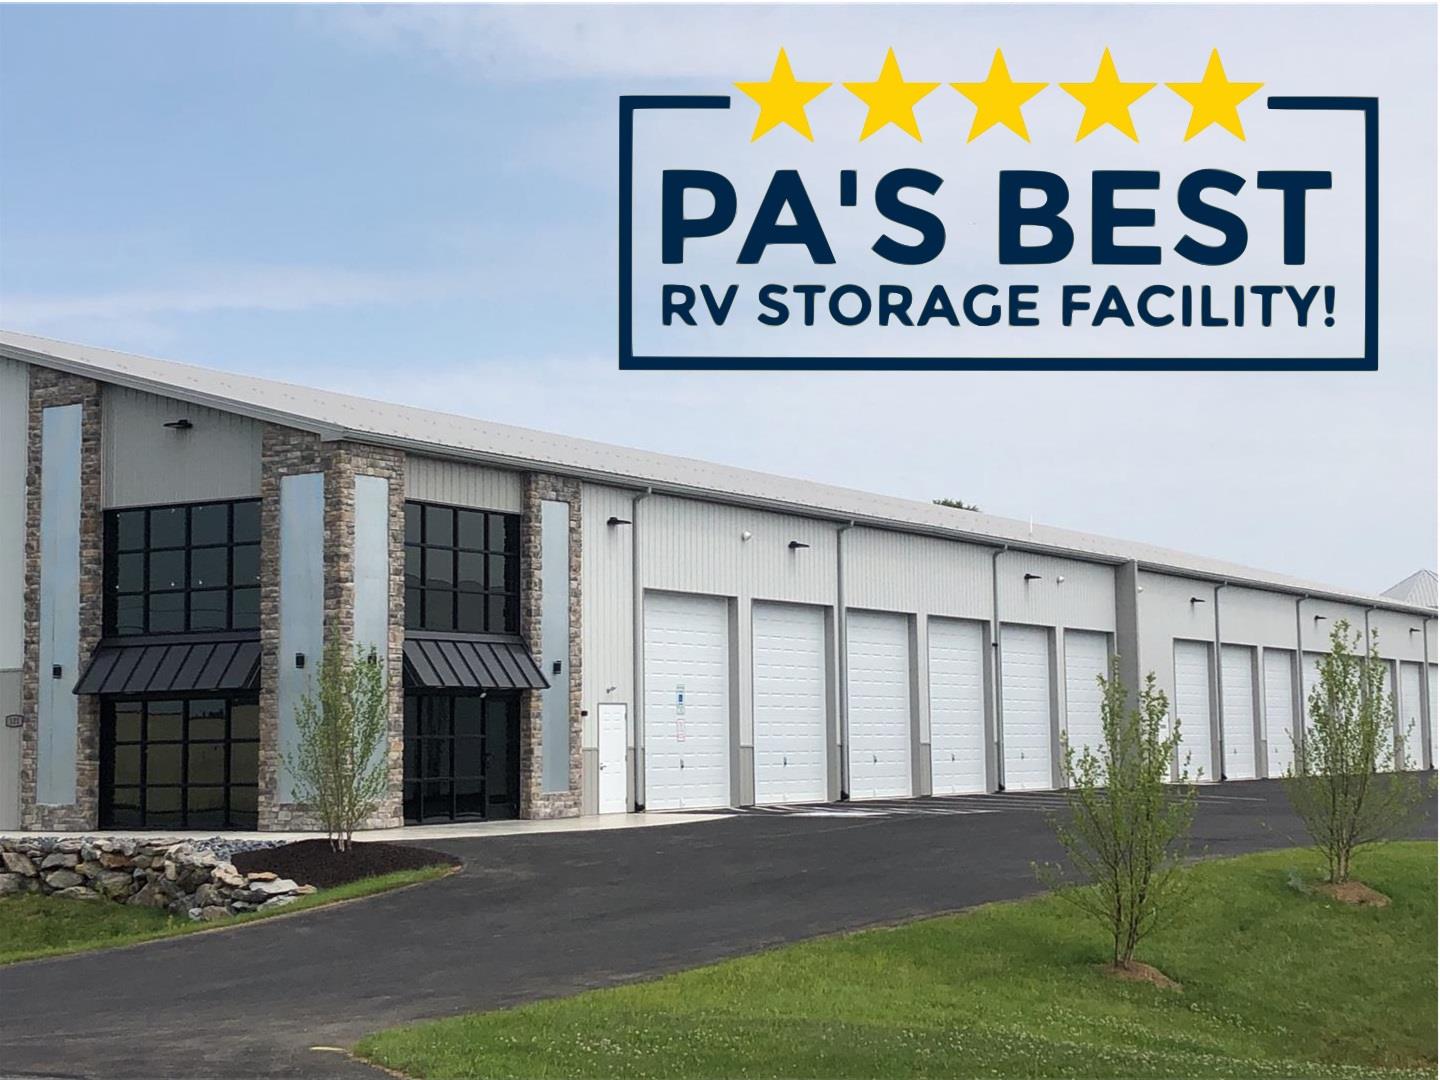 PA Best RV Storage Facility 